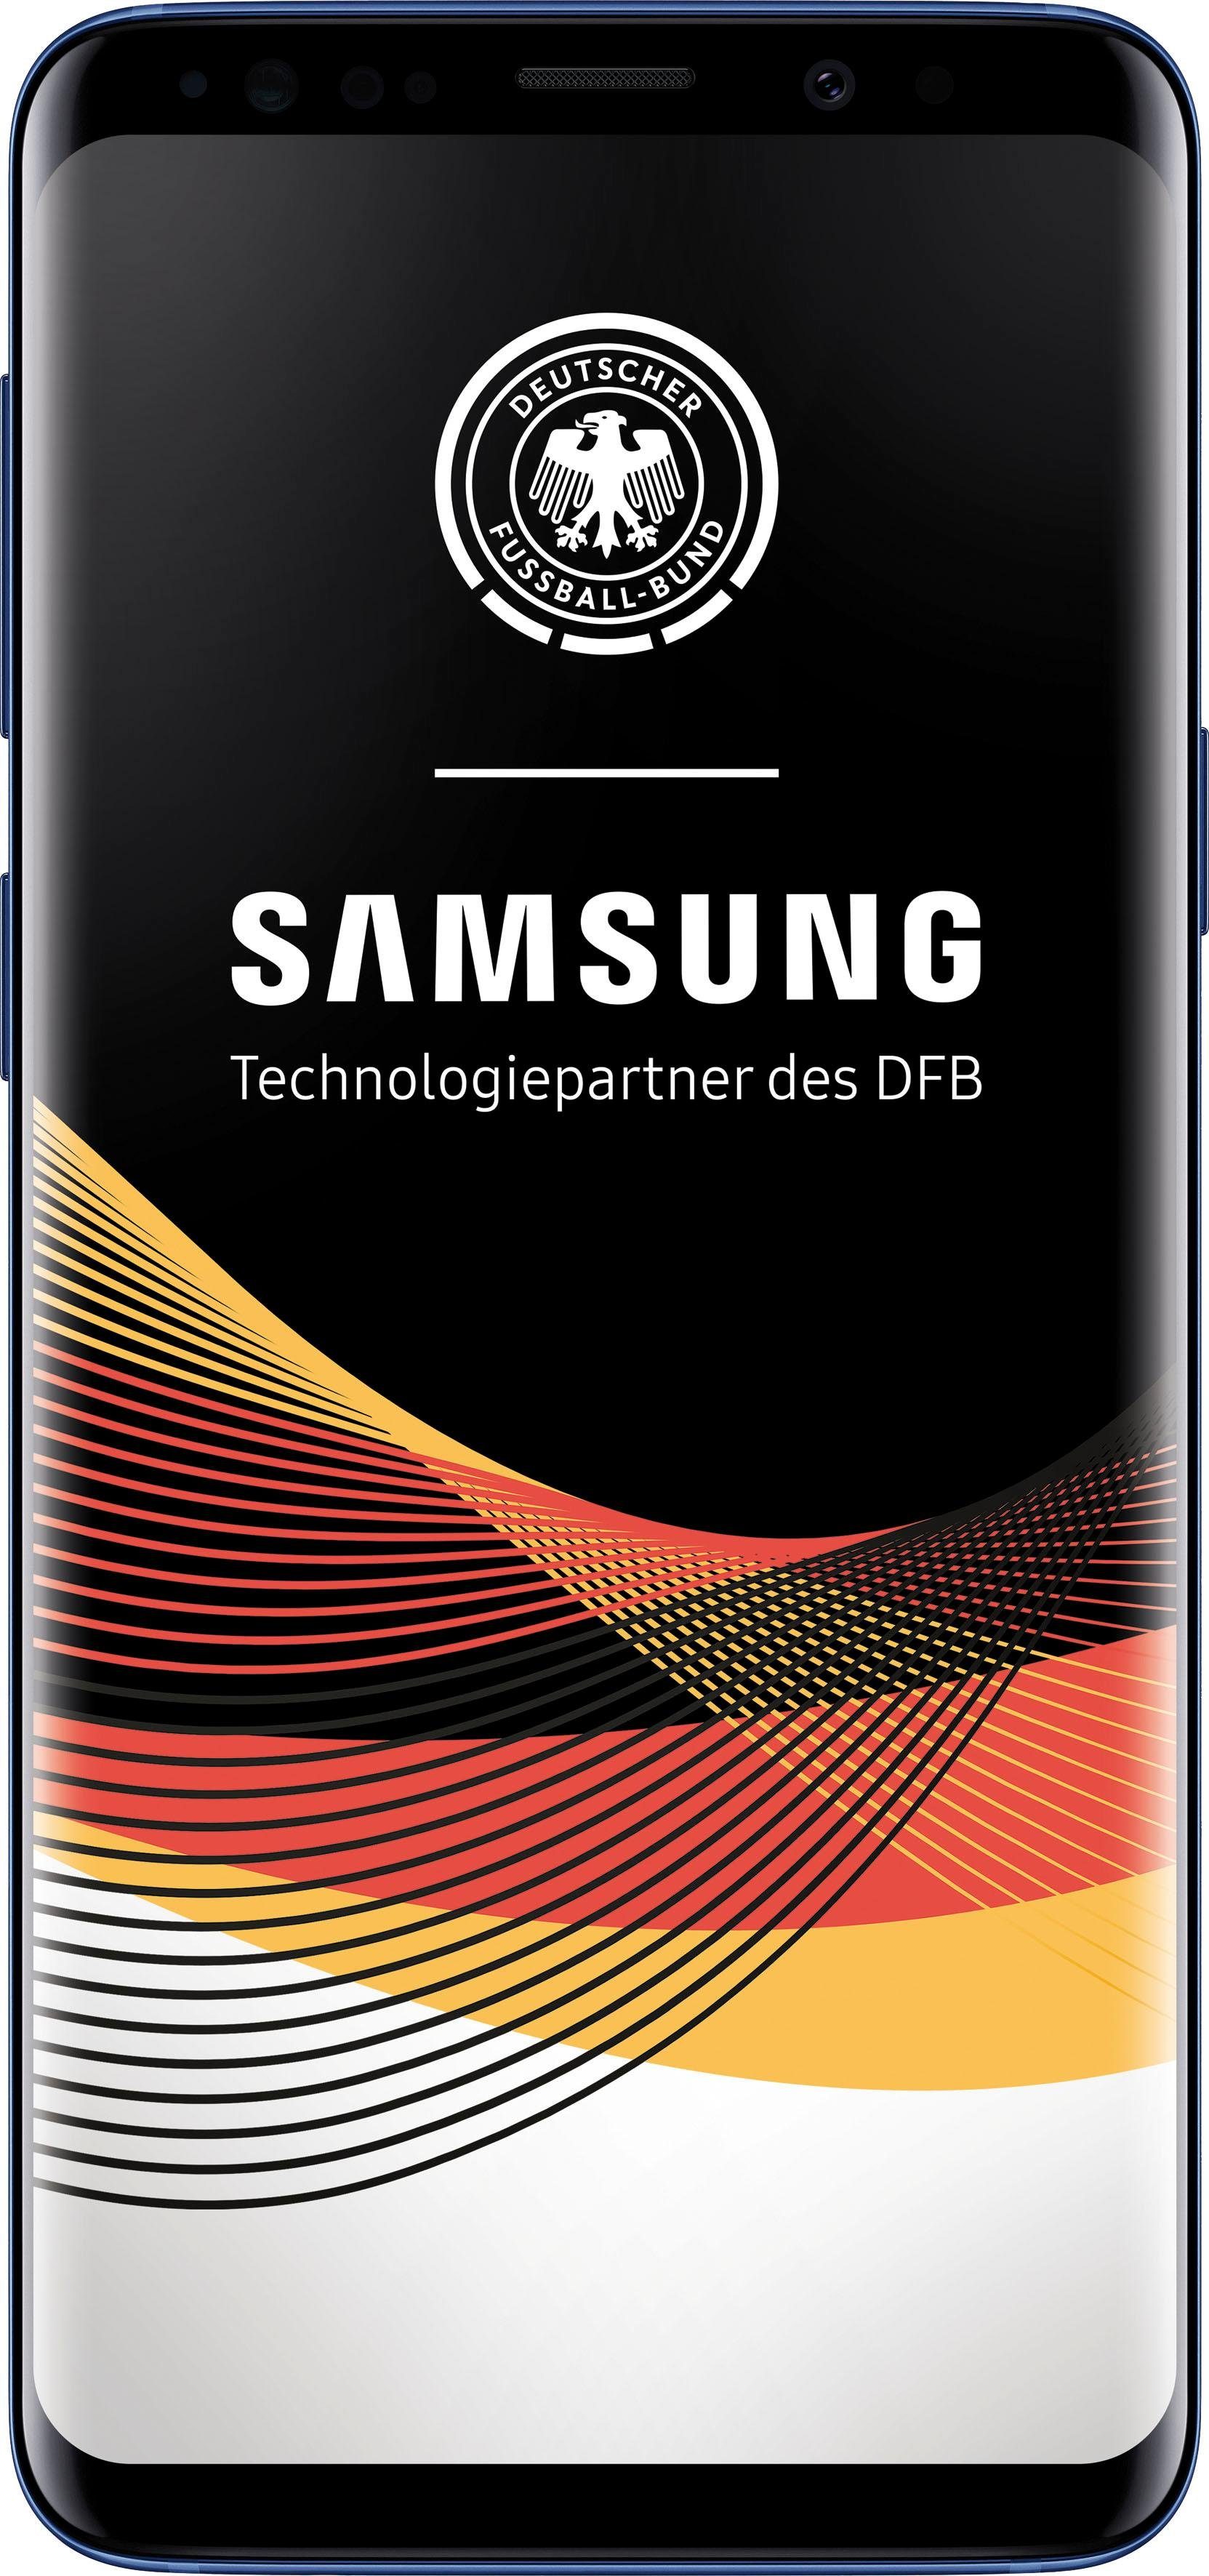 Otto - SAMSUNG Samsung Galaxy S9 dualsim-smartphone (14,65 cm / 5,77 inch, 64 GB, 12MP-camera)